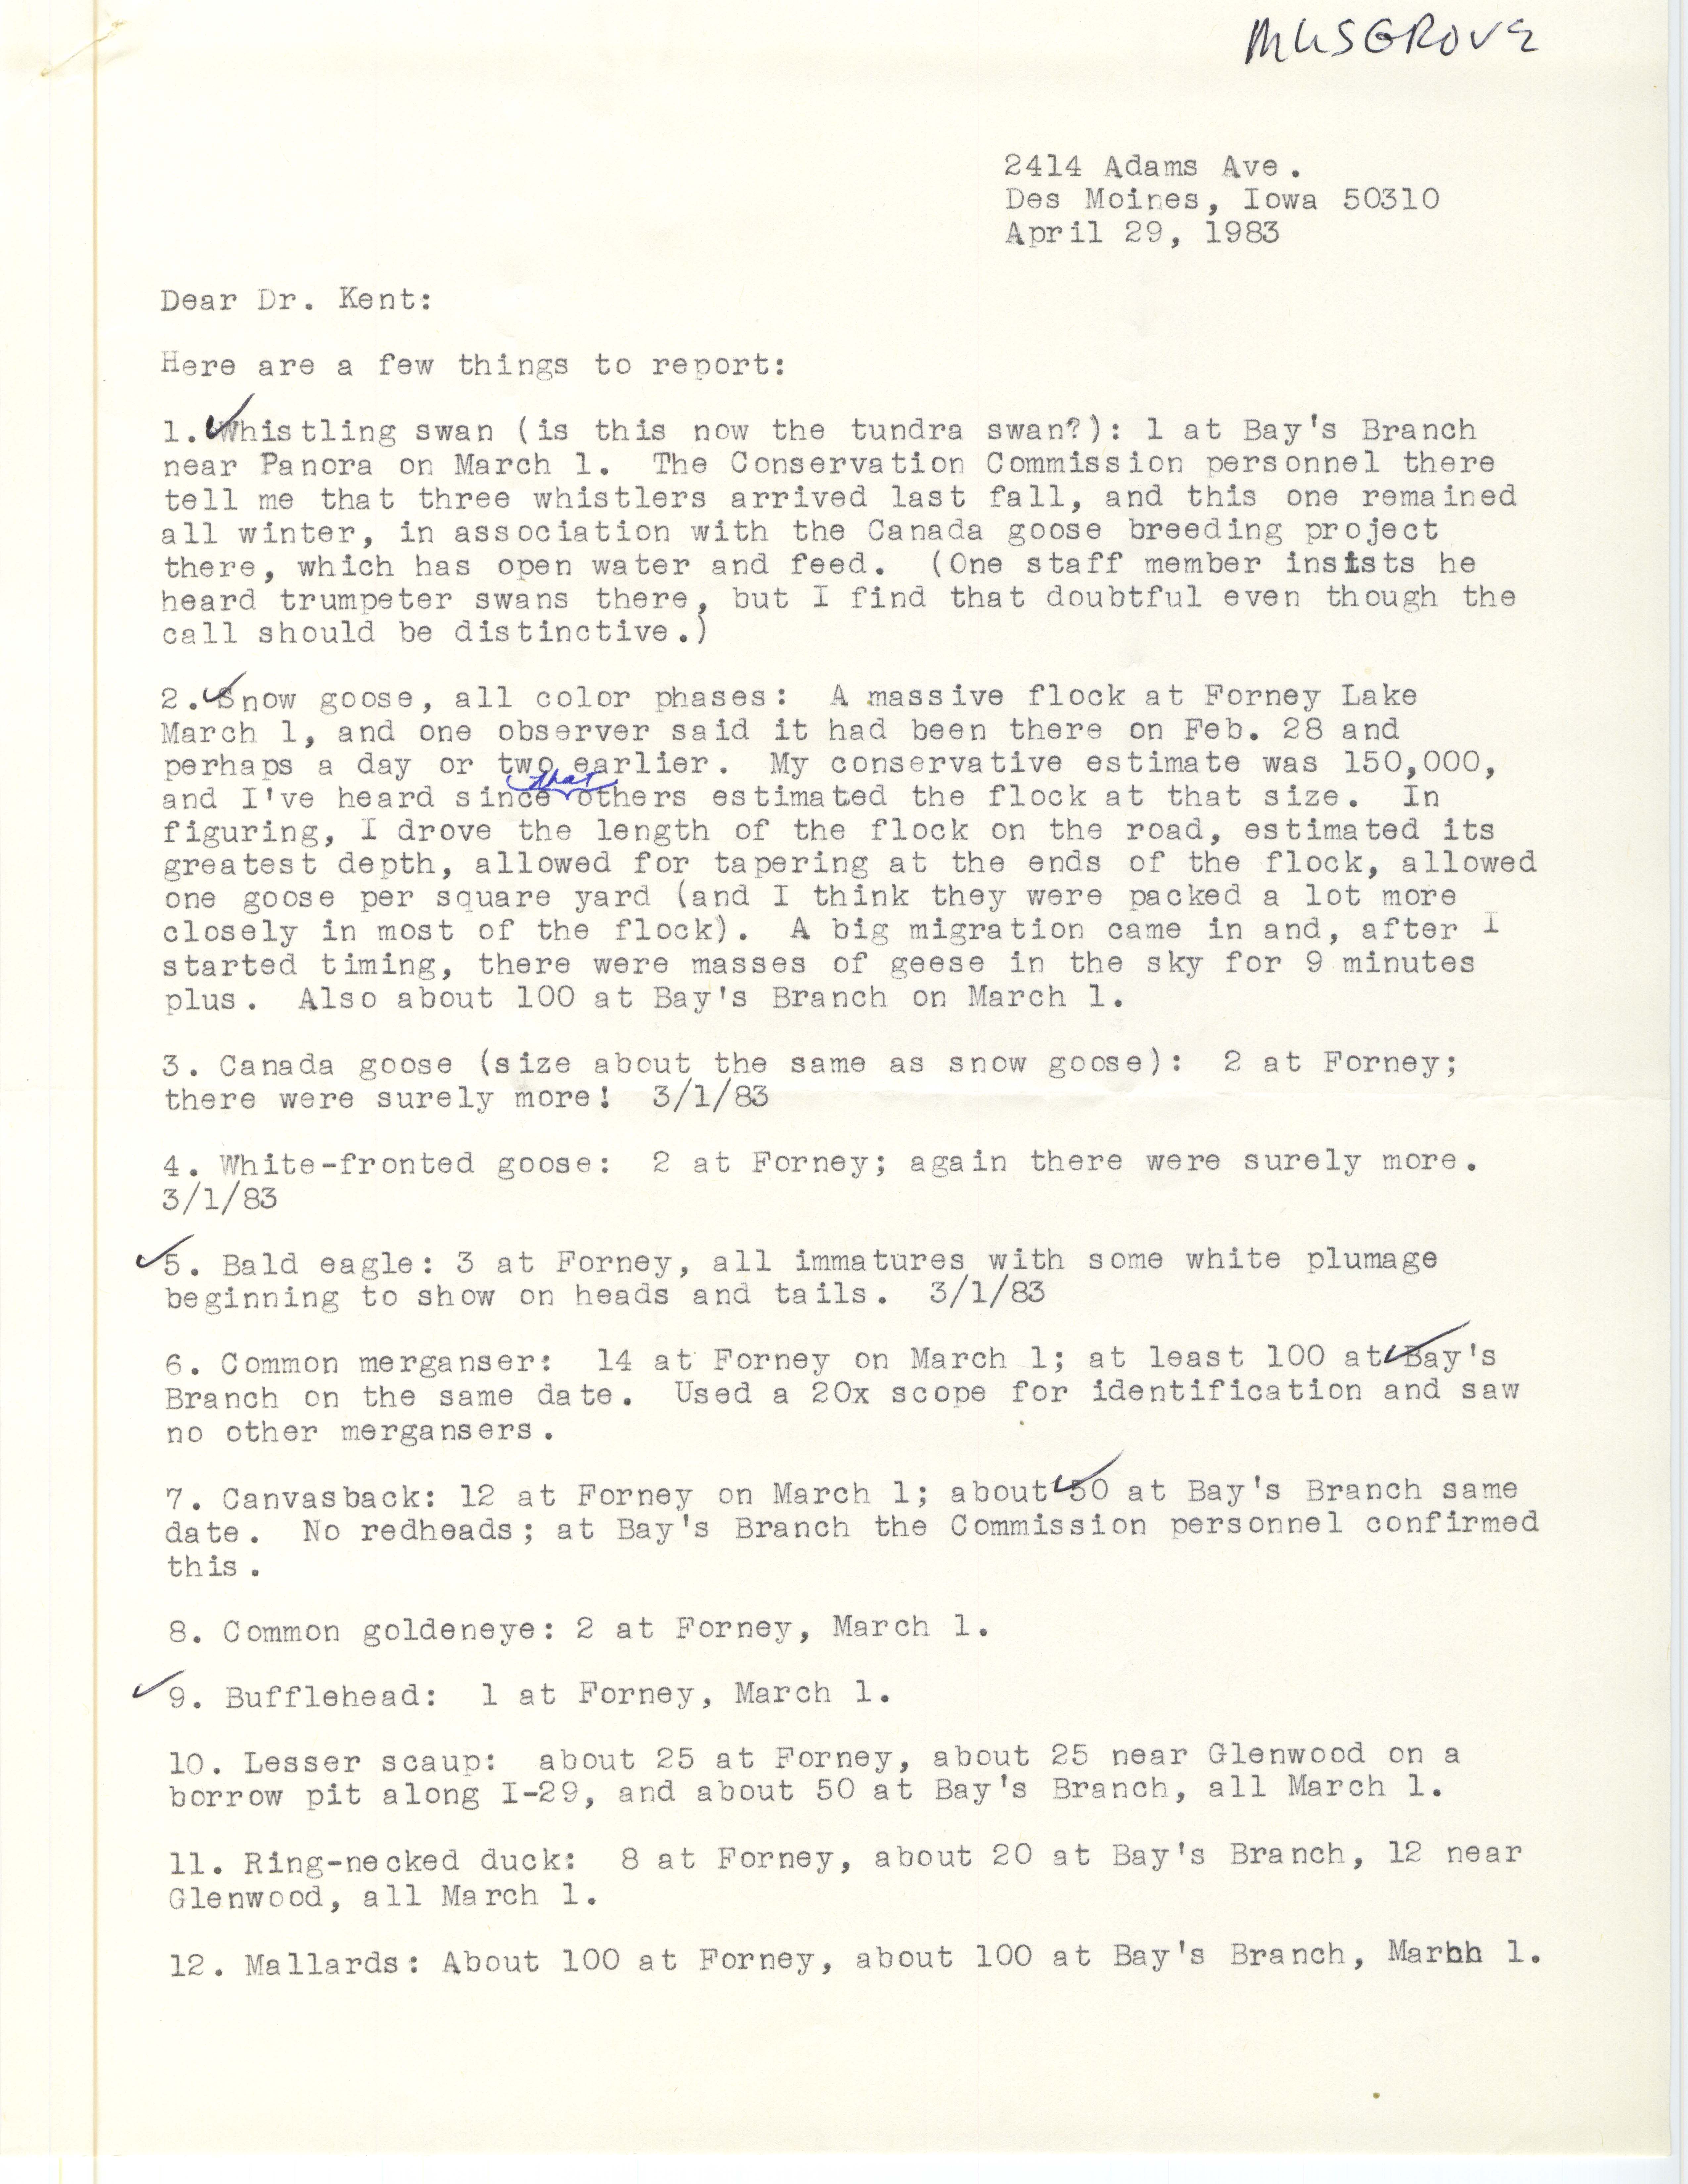 Mary R. Musgrove letter to Thomas H. Kent regarding spring bird sightings, April 29, 1983